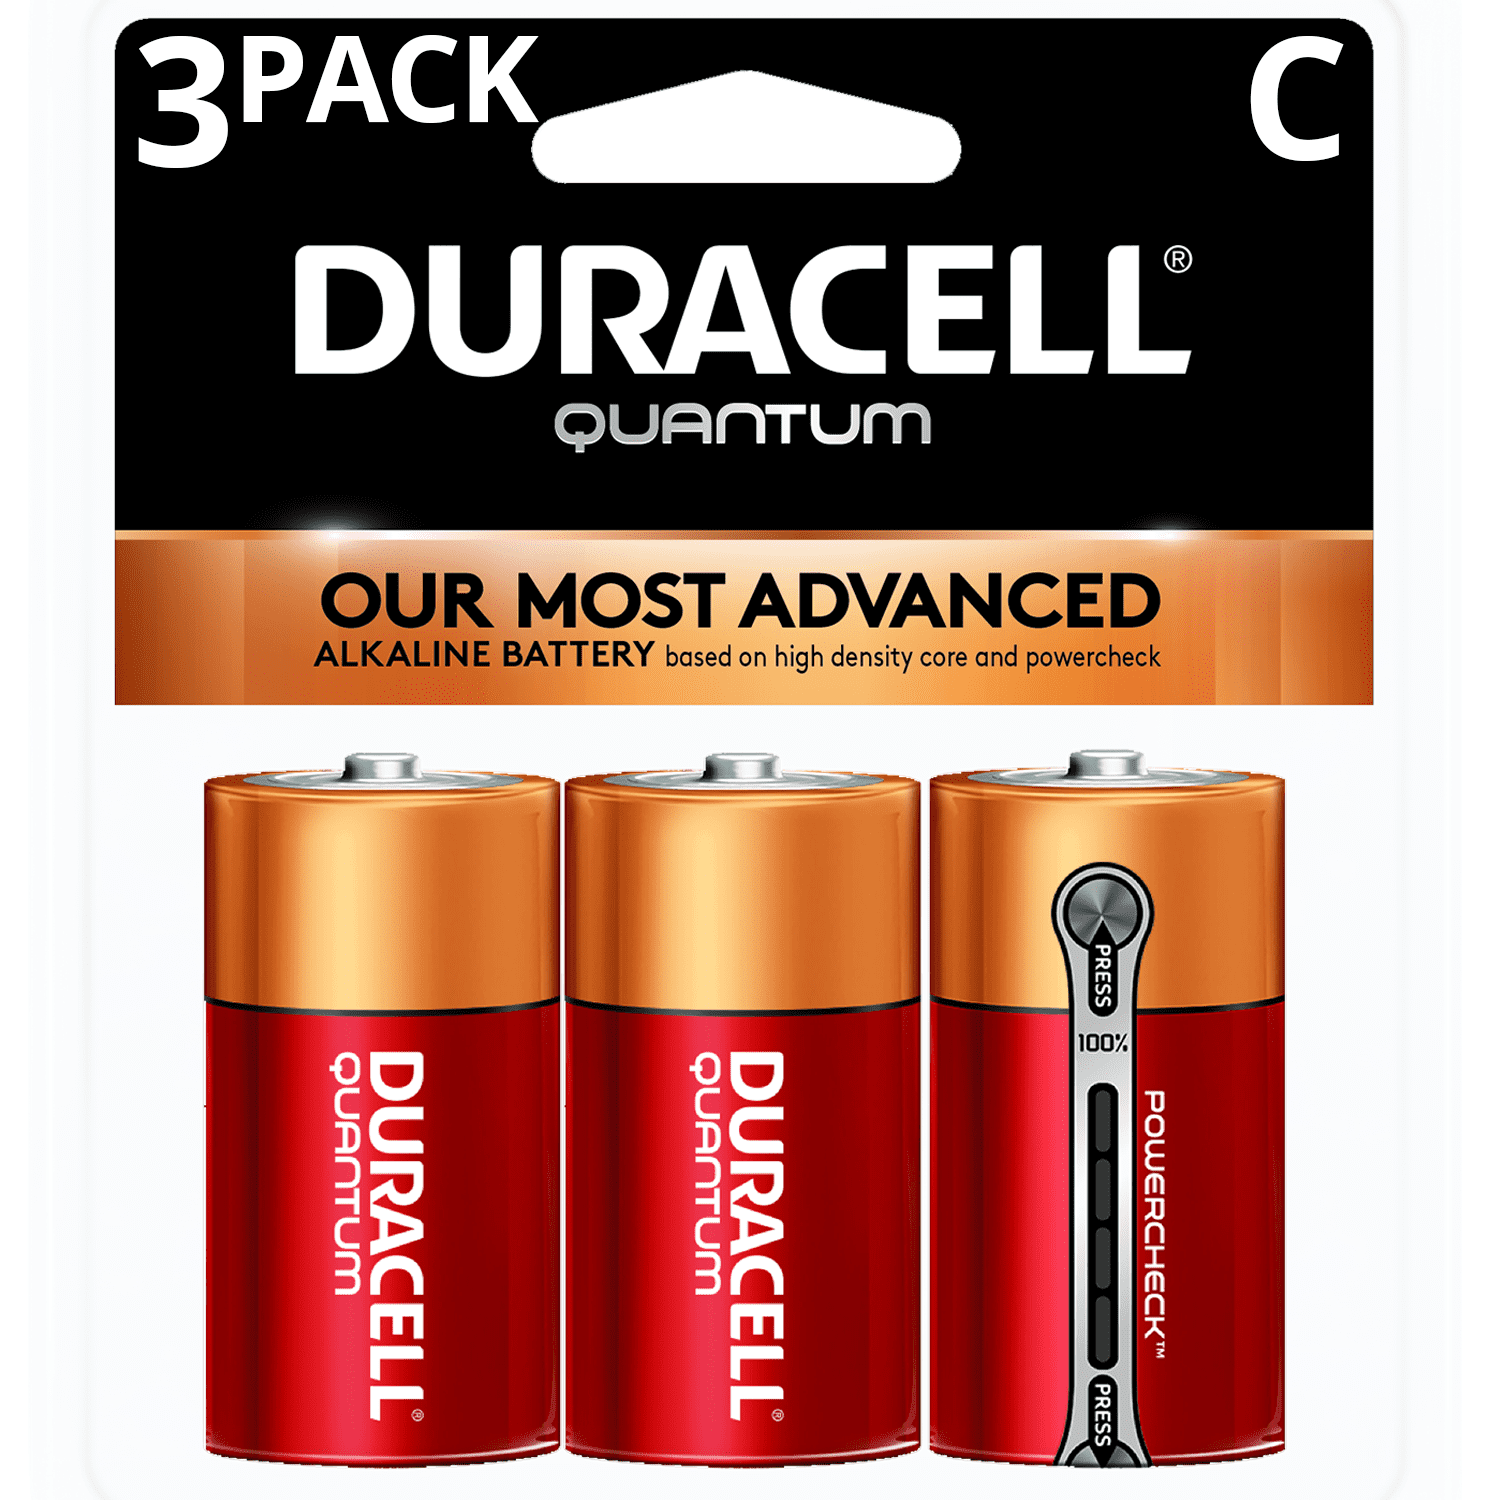 Duracell 1 5v Quantum Alkaline C Batteries With Powercheck 3 Pack